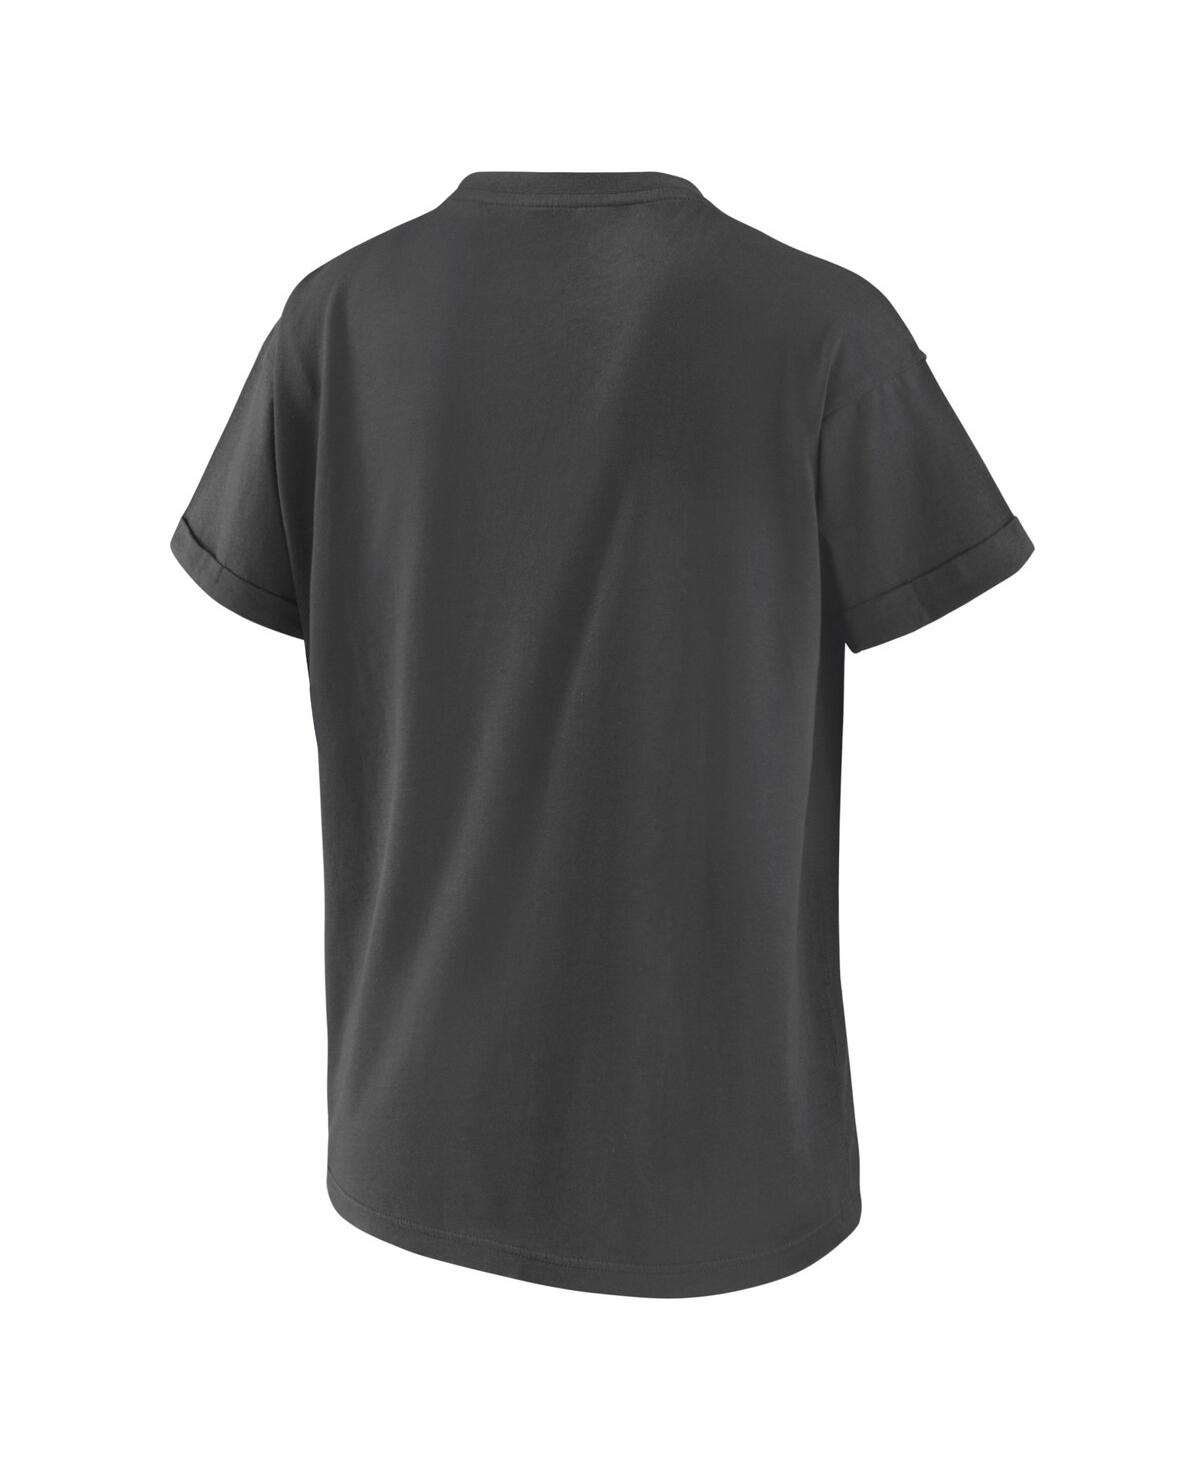 Shop Wear By Erin Andrews Women's  Charcoal New York Islanders 2024 Nhl Stadium Series Boyfriend T-shirt